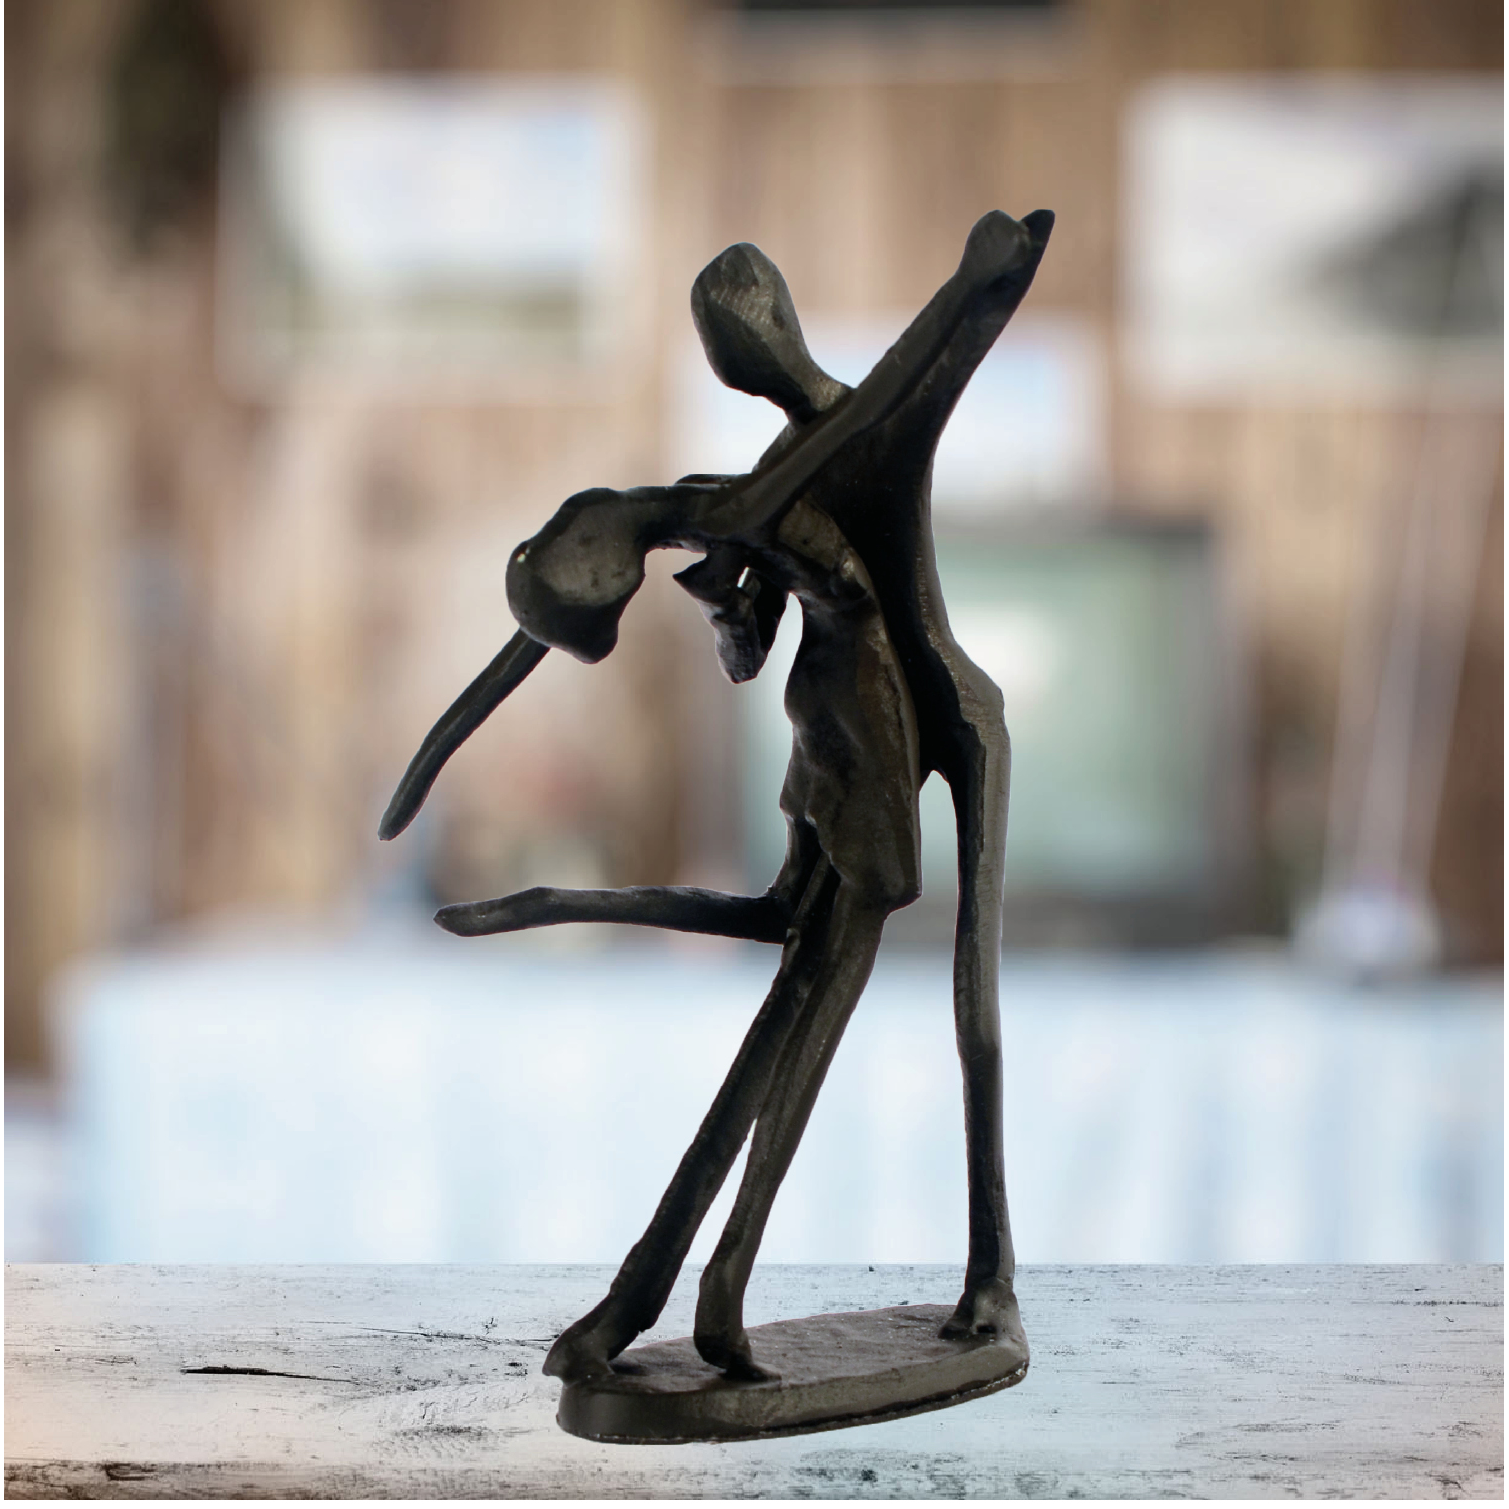 Elur Dancing Couple In Hold Iron Status Figurine 15cm in Mocha Brown Statues Elur   